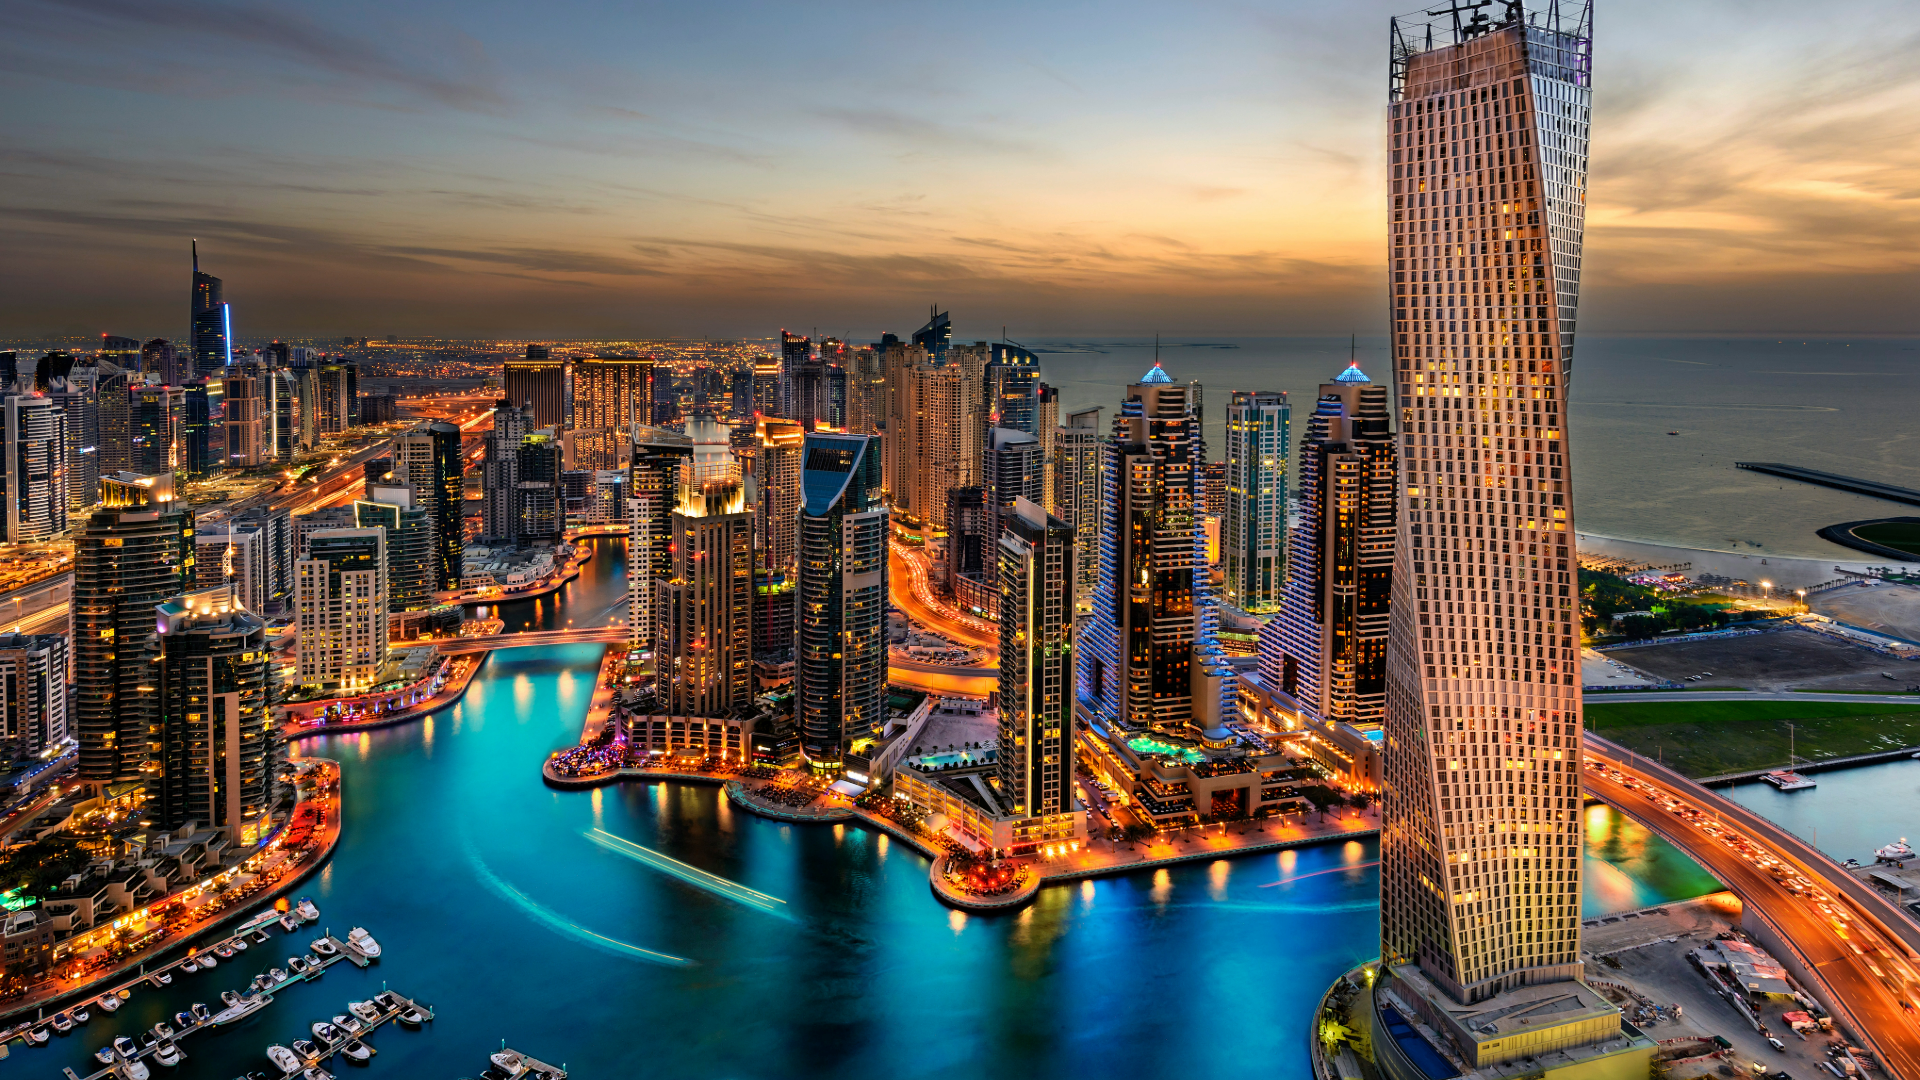 Sunset skyline highlighting the Dubai property boom